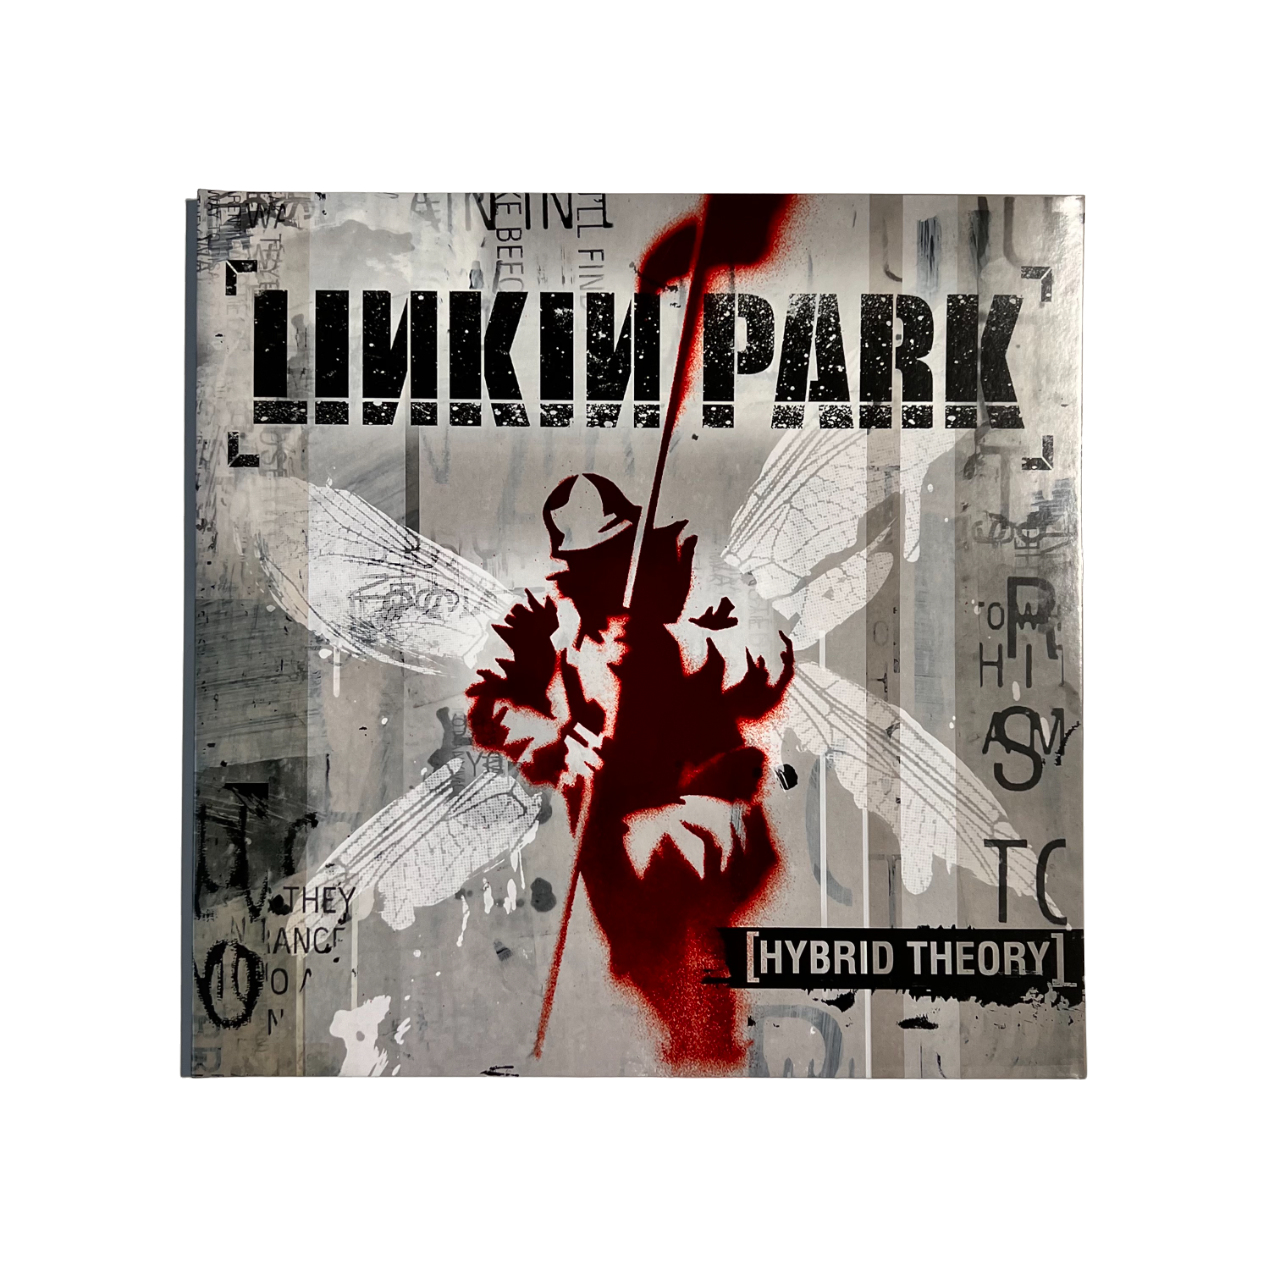 Linkin Park - Hybrid Theory - Red